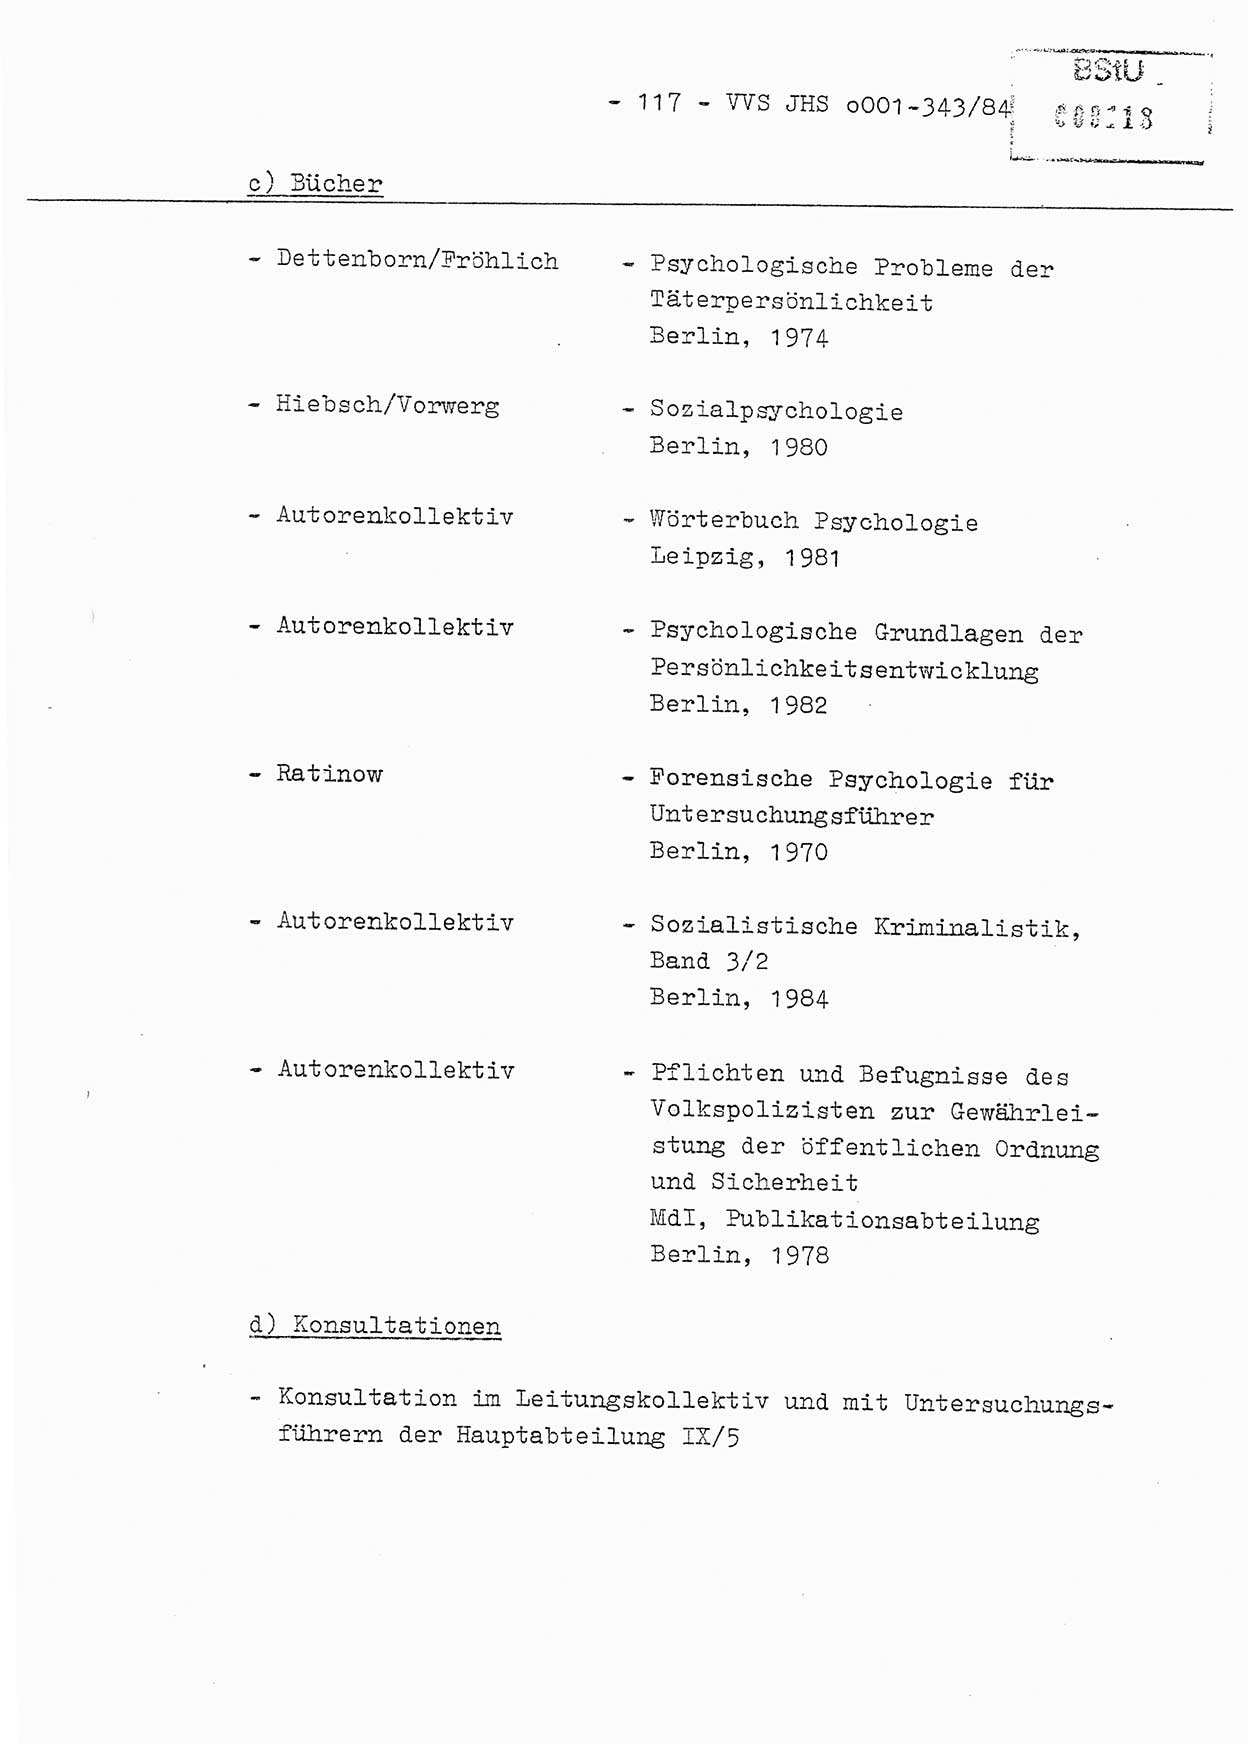 Diplomarbeit, Oberleutnant Bernd Michael (HA Ⅸ/5), Oberleutnant Peter Felber (HA IX/5), Ministerium für Staatssicherheit (MfS) [Deutsche Demokratische Republik (DDR)], Juristische Hochschule (JHS), Vertrauliche Verschlußsache (VVS) o001-343/84, Potsdam 1985, Seite 117 (Dipl.-Arb. MfS DDR JHS VVS o001-343/84 1985, S. 117)